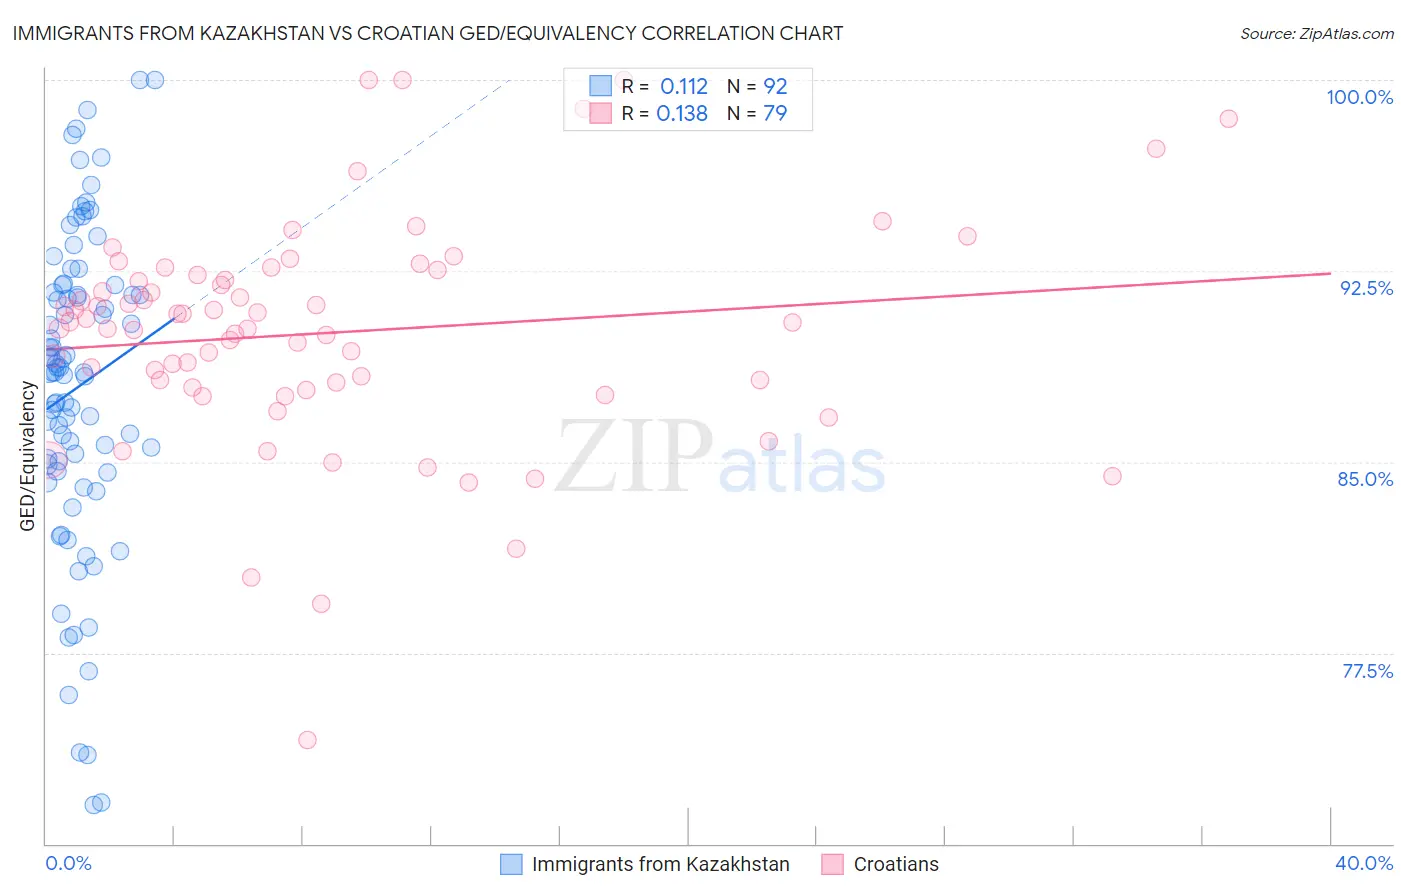 Immigrants from Kazakhstan vs Croatian GED/Equivalency